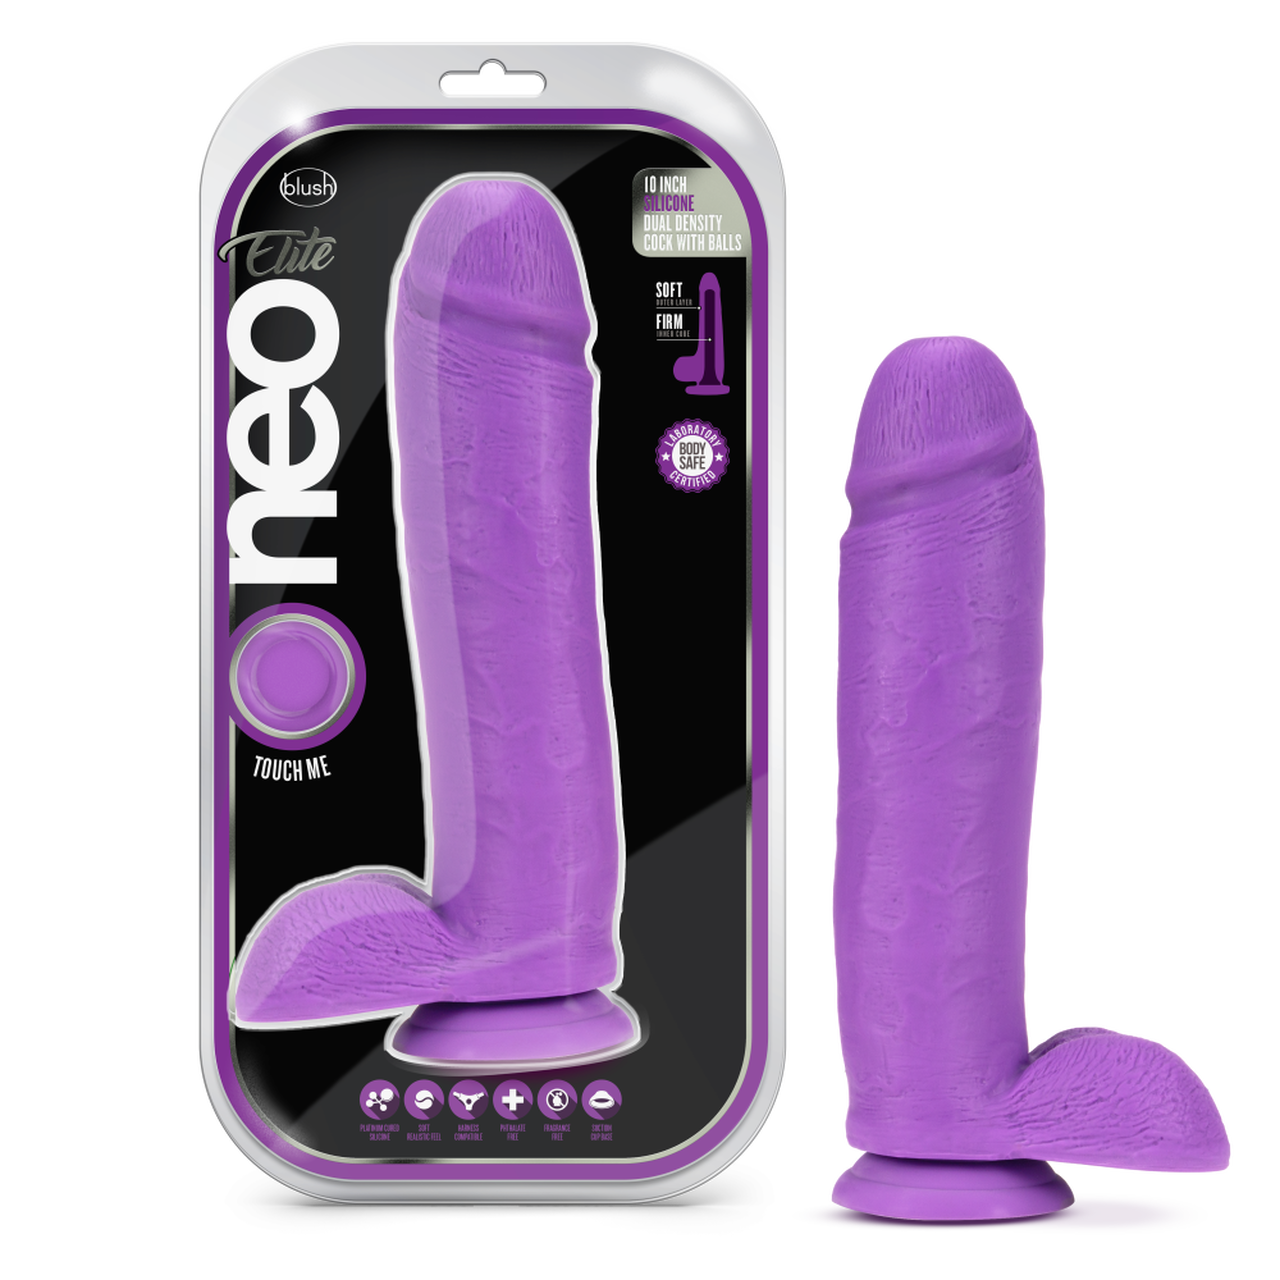 Neo Elite - 10 inch Silicone Dual Density Dildo with Balls - Purple